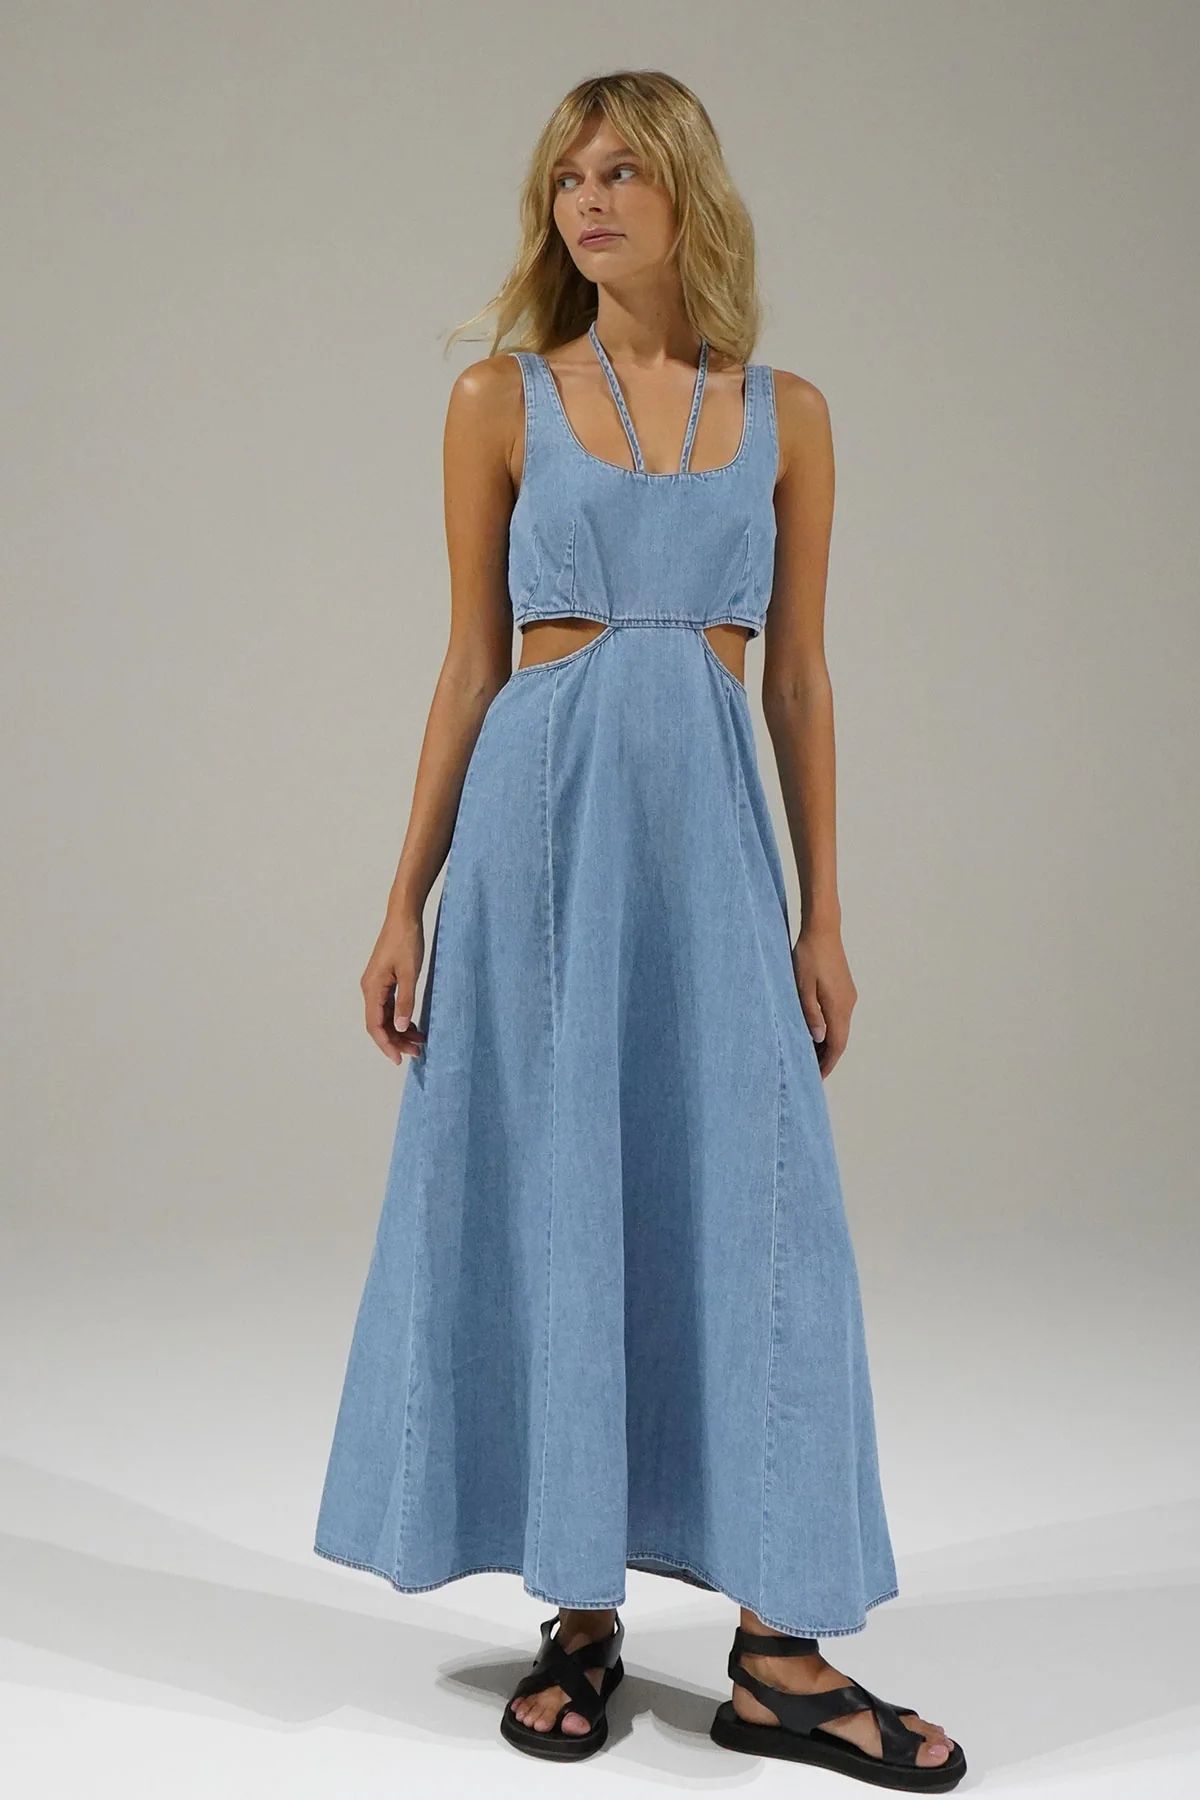 LNA Lorelei Chambray Dress in Faded Blue | LNA Clothing